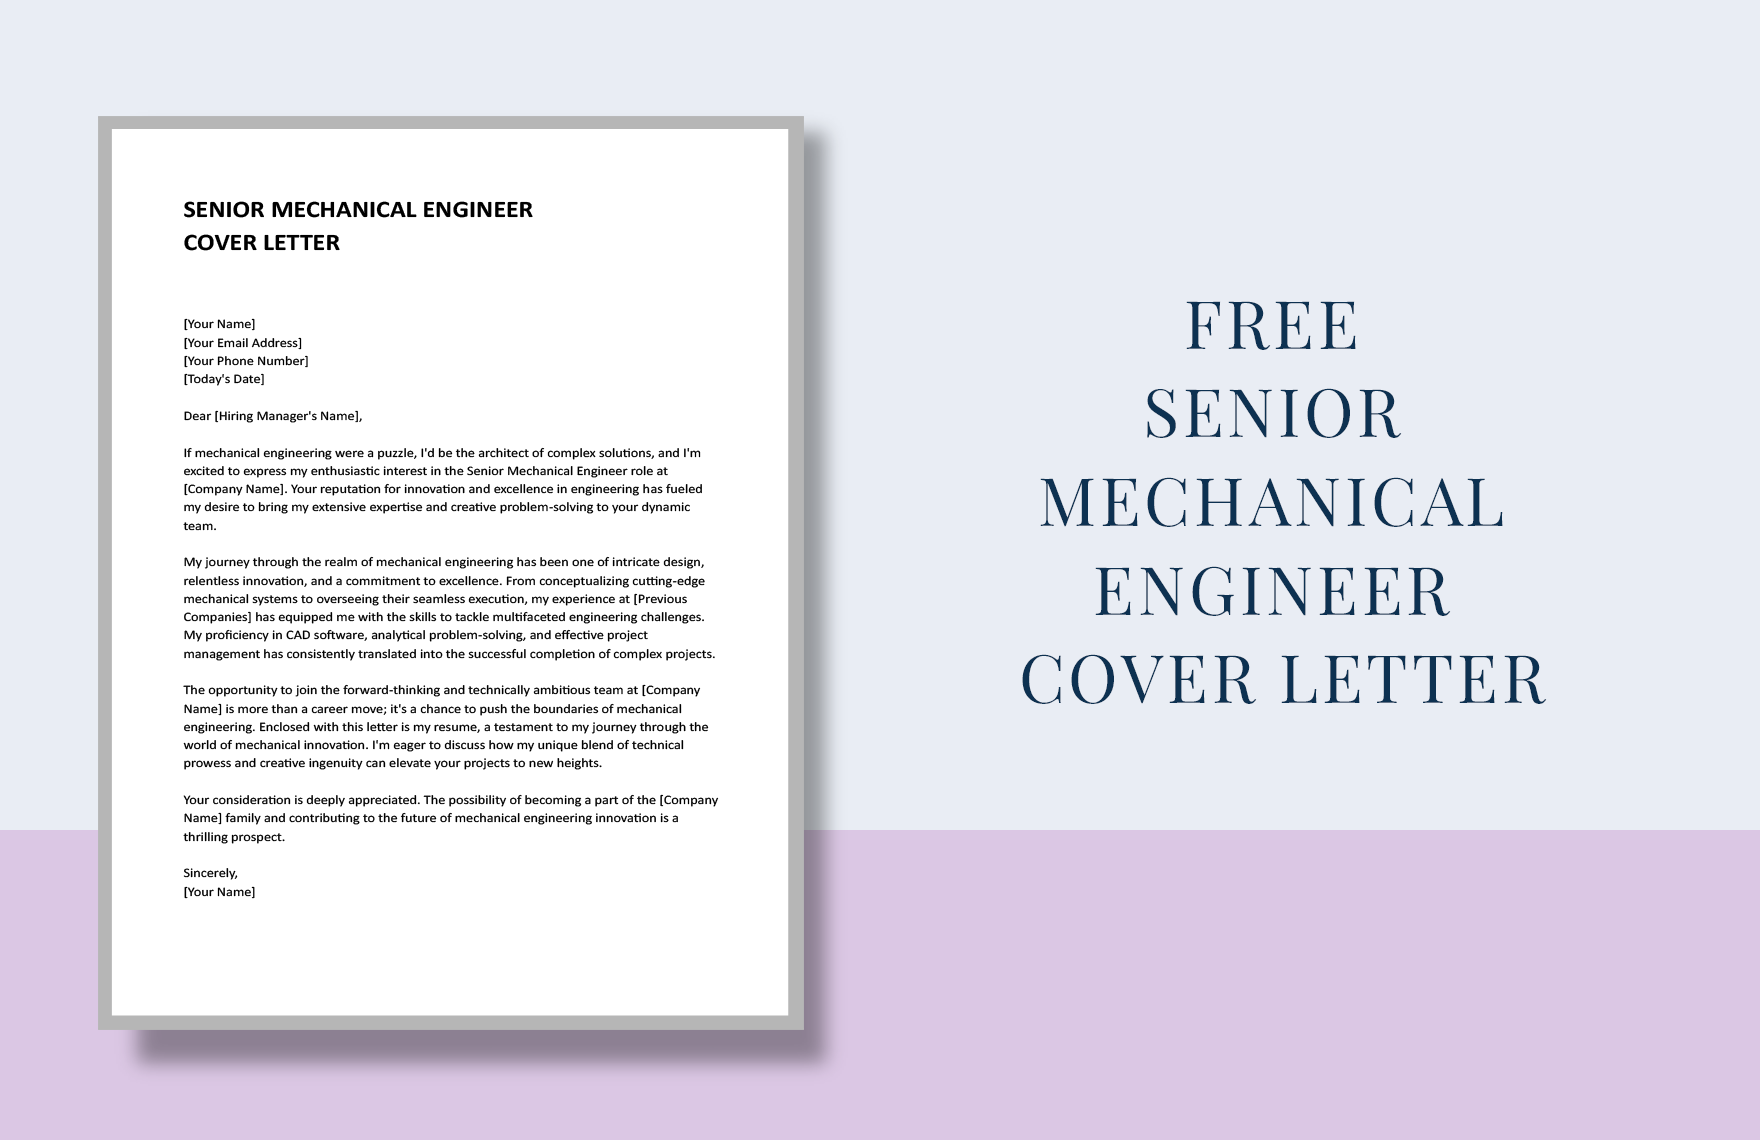 Senior Mechanical Engineer Cover Letter in Word, Google Docs